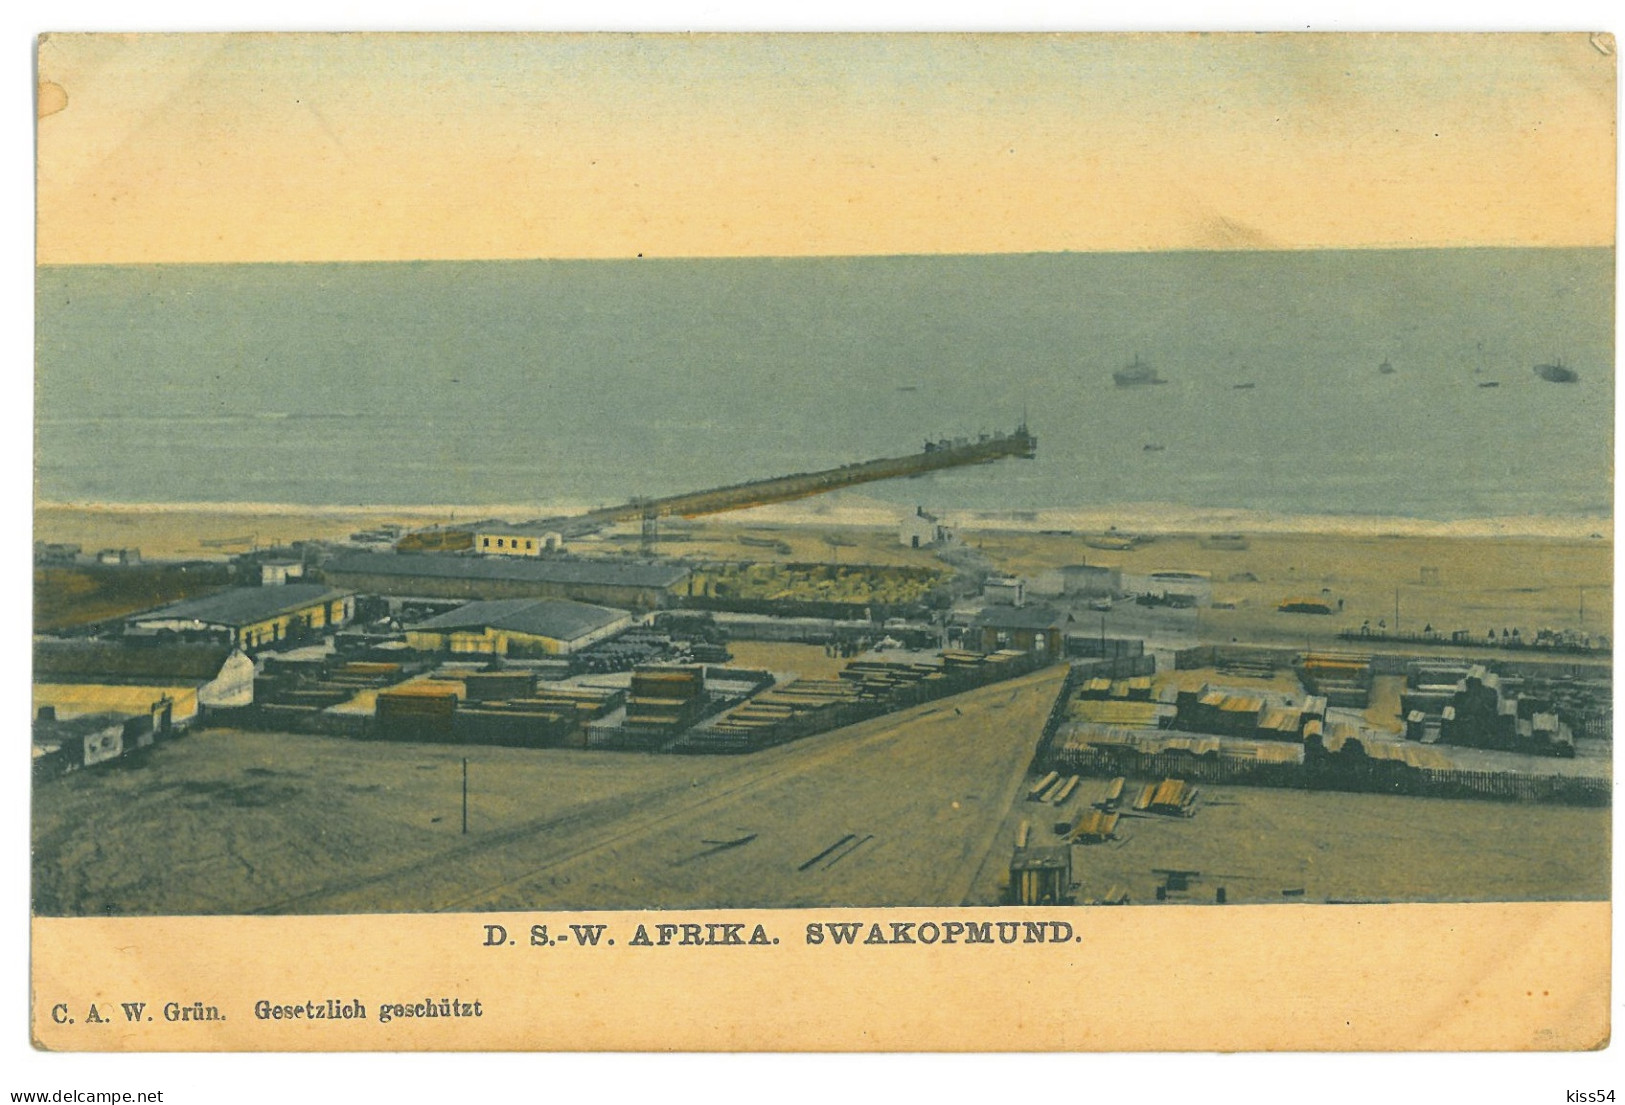 NAM 8 - 23797 SWAKOPMUND, Harbor & Wharf, D.S.W. Afrika, Namibia - Old Postcard - Unused - Namibië